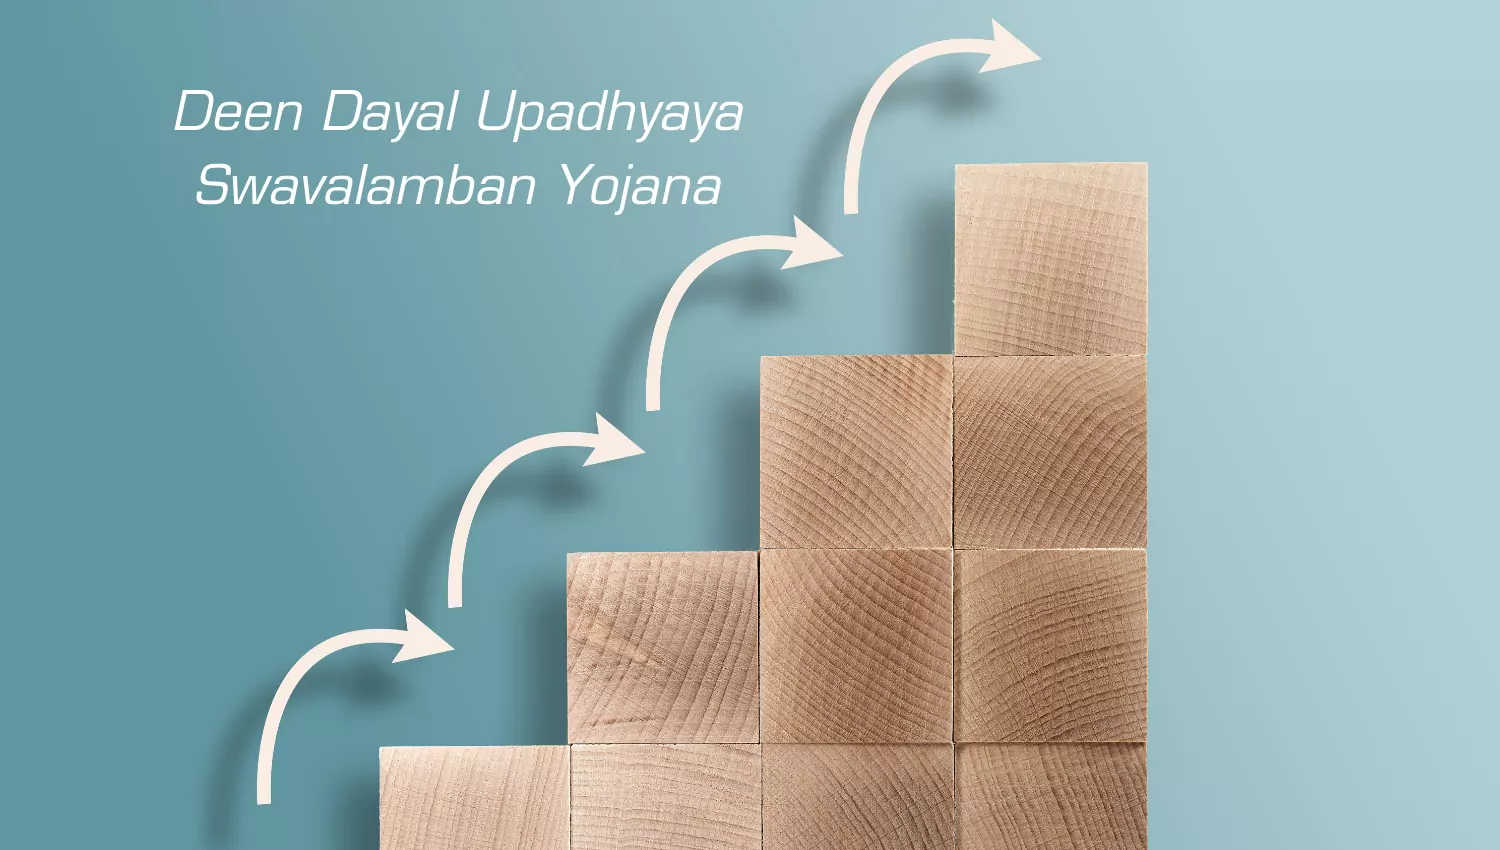 How to apply for Deen Dayal Upadhyaya Swavalamban Yojana 2020